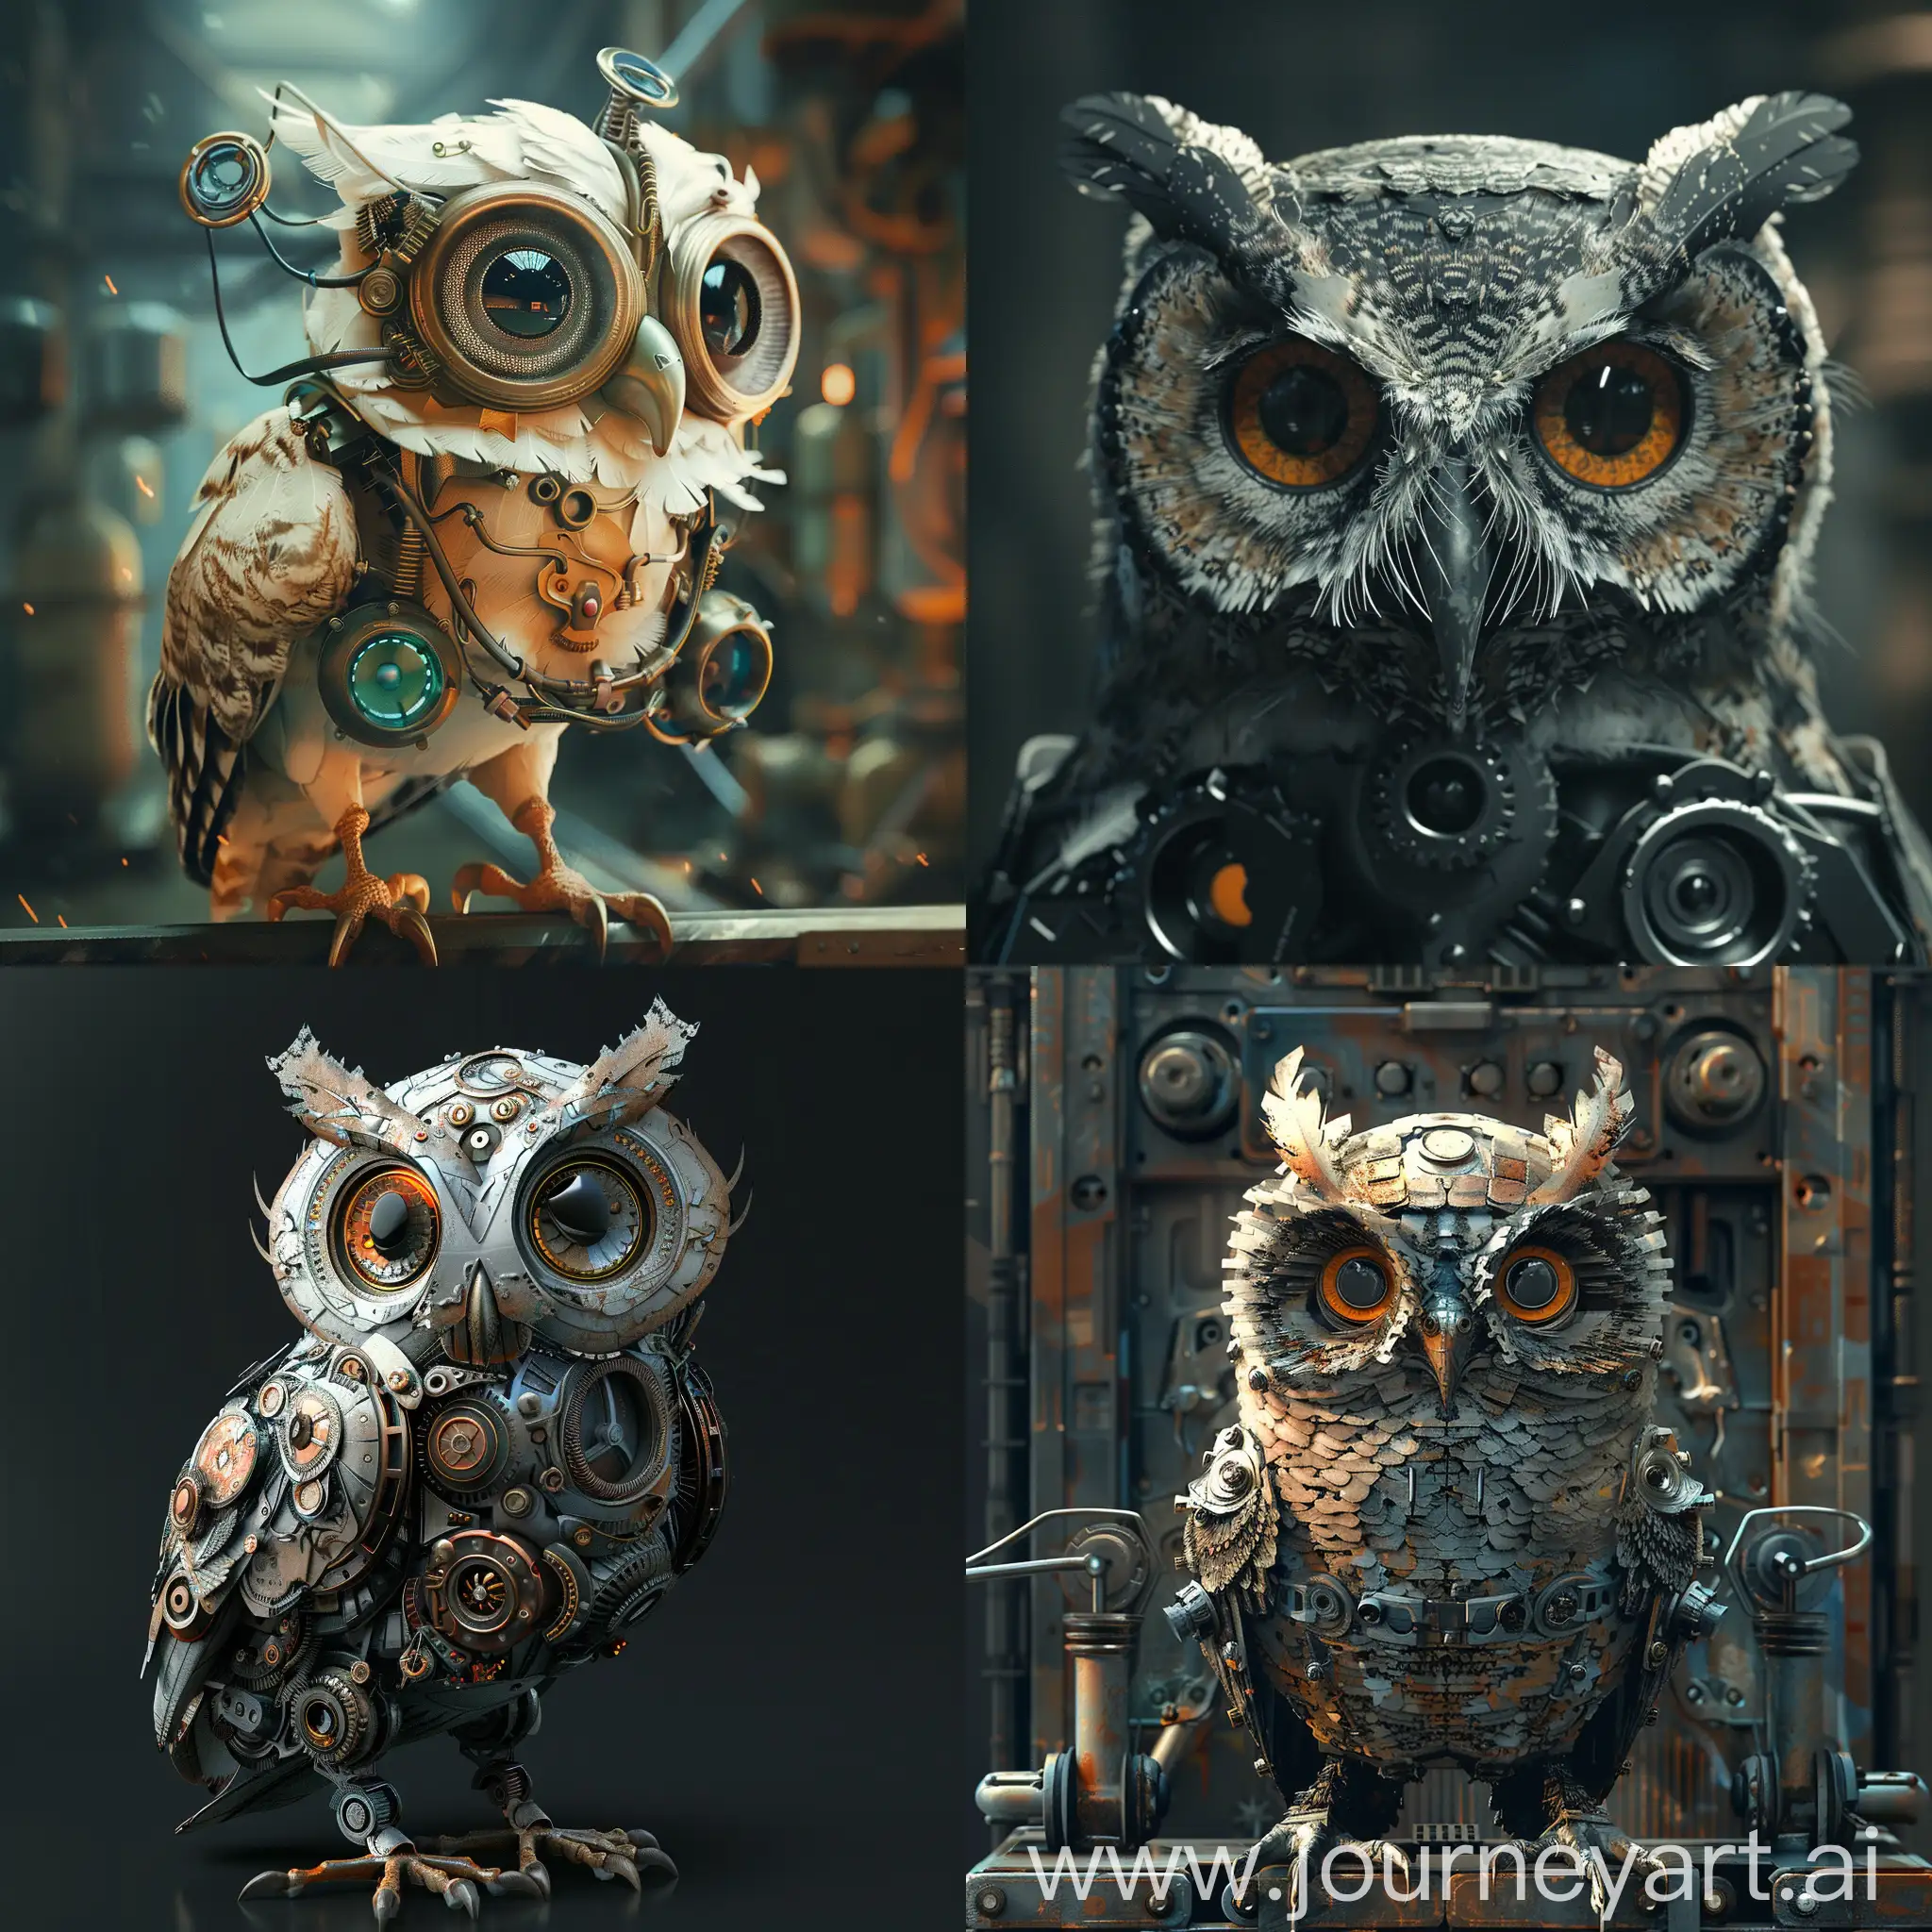 Cute-Owl-Representing-Additive-Technologies